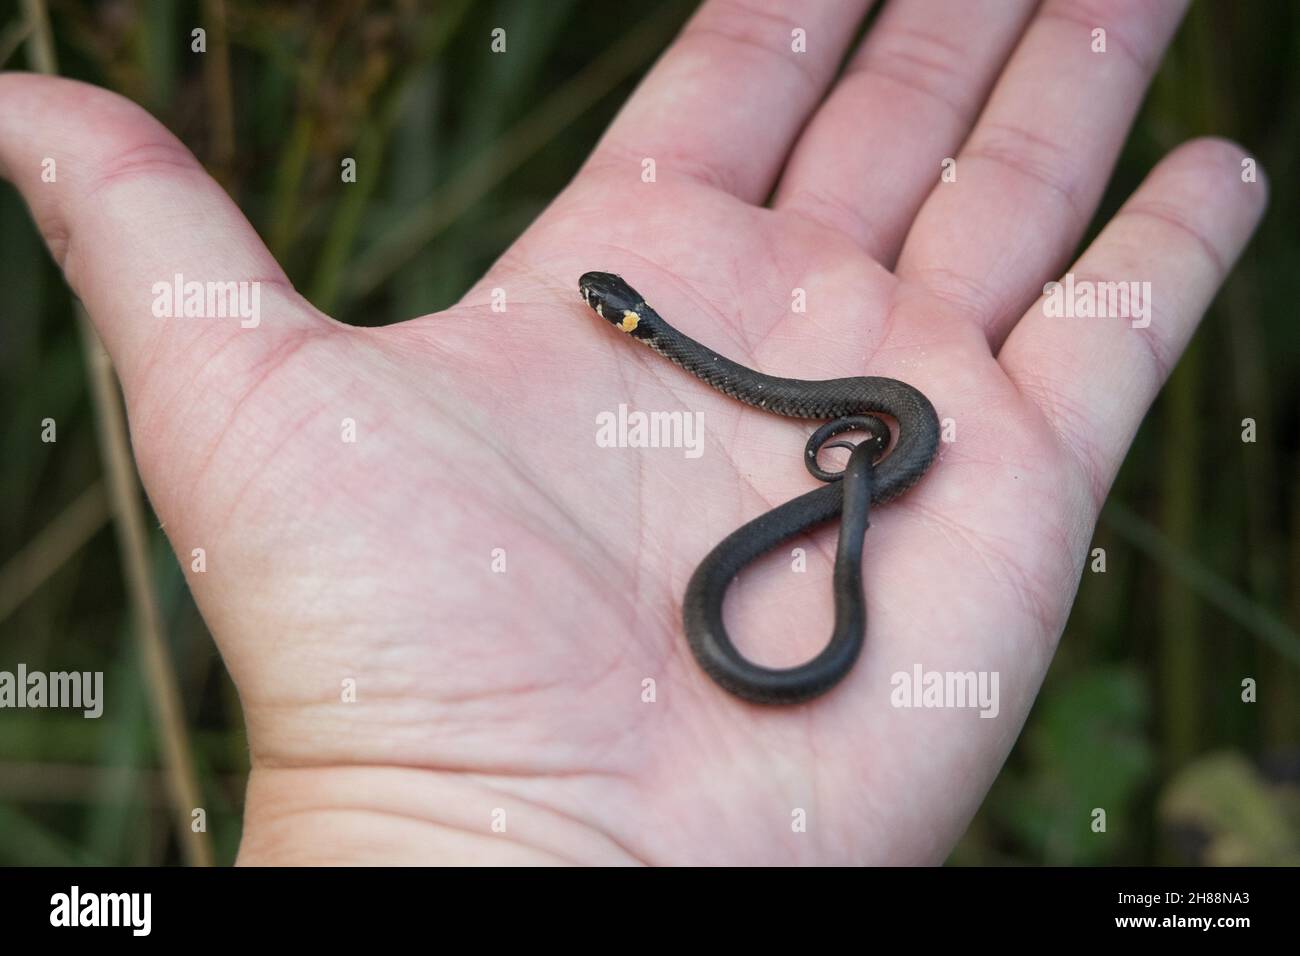 A little european grass snake natrix natrix on a palm close up Stock Photo